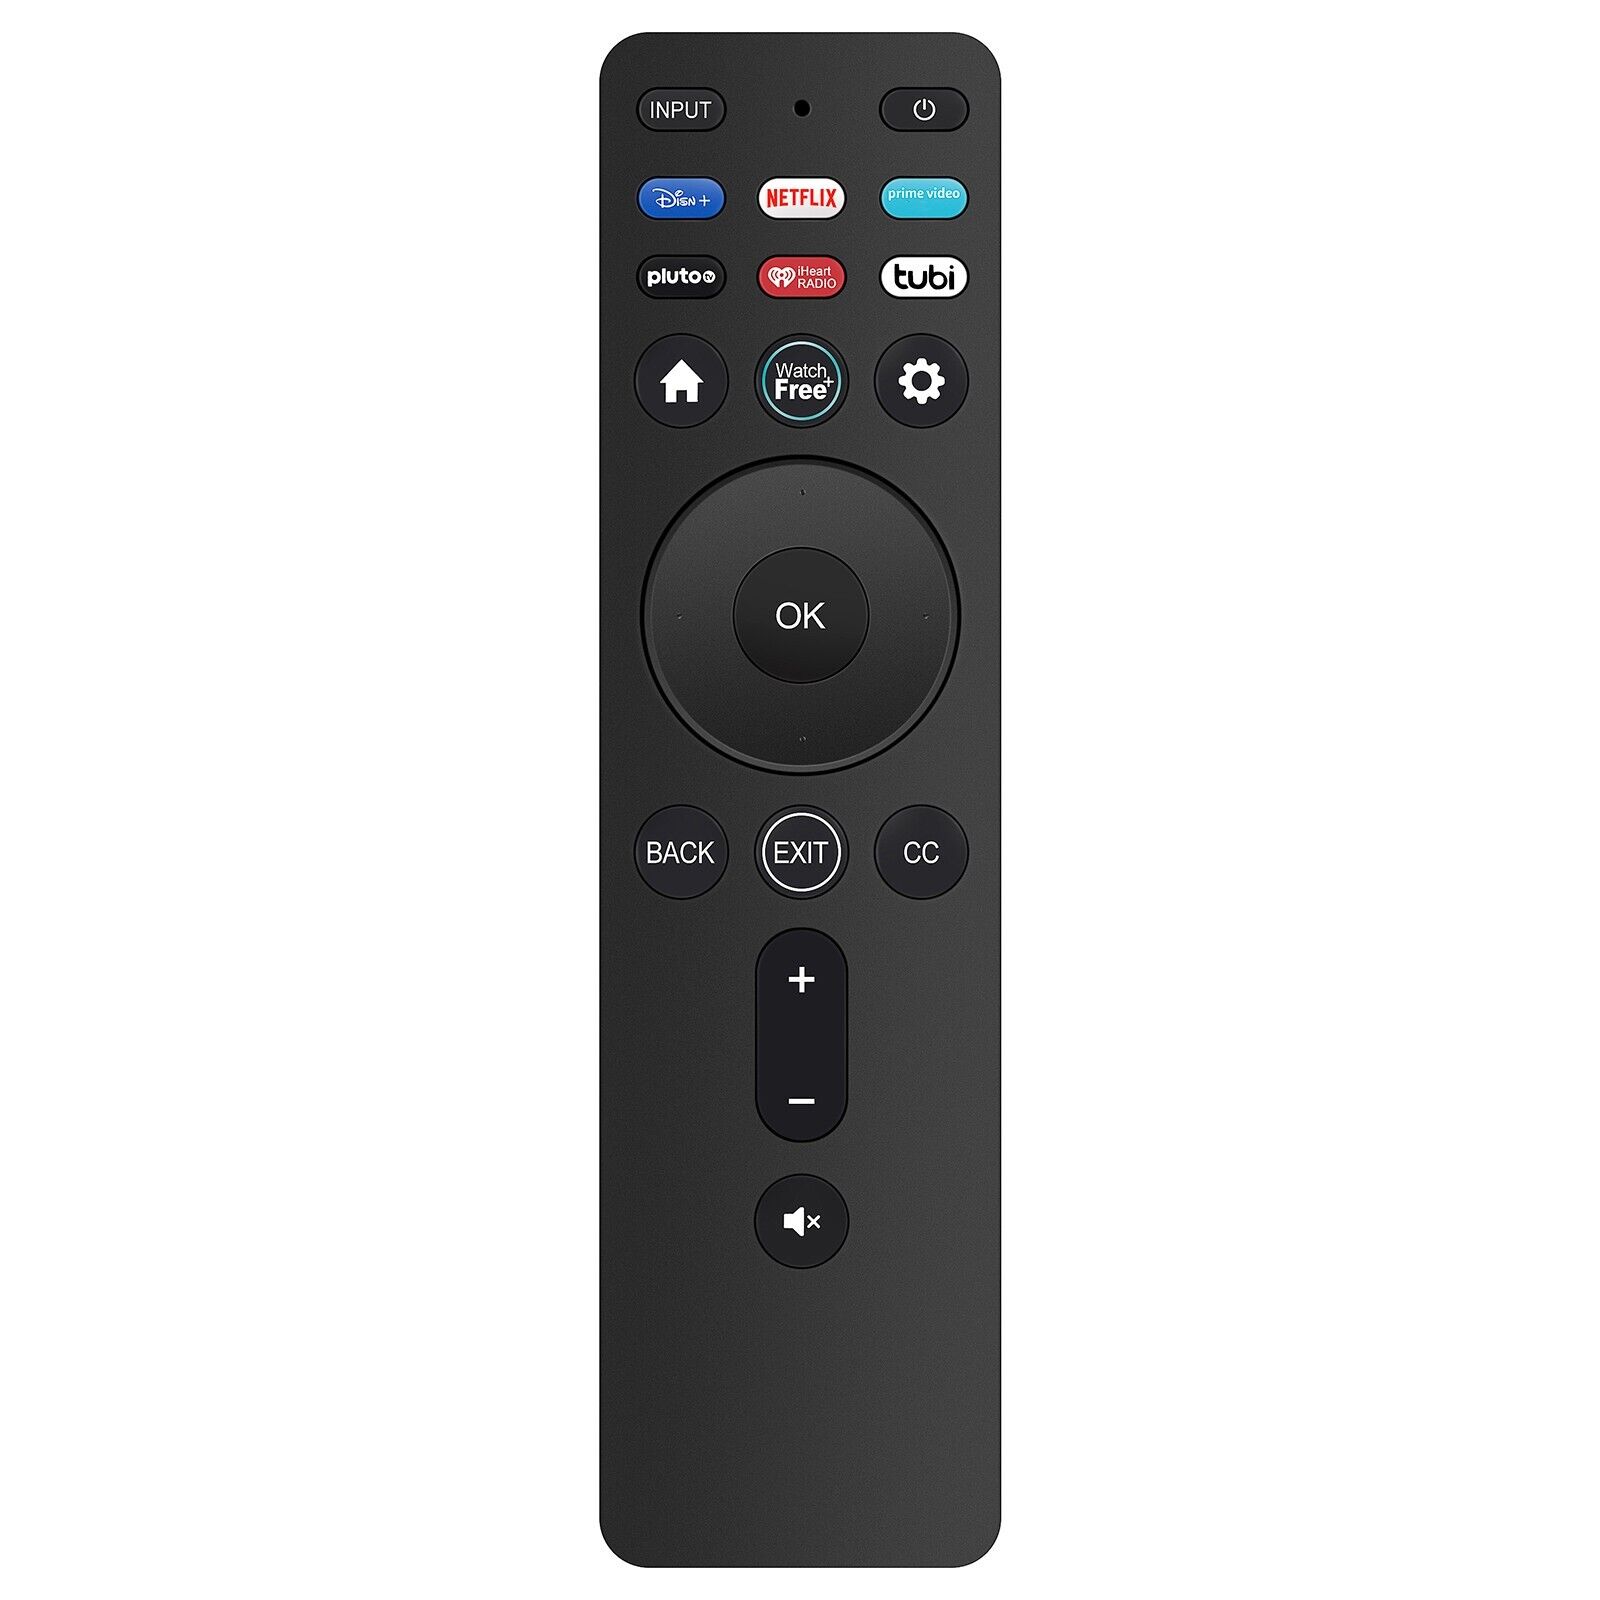 XRT260 Replace Remote Control Fit For Vizio TV M75Q7-J03 V655-J09 P65Q9-J01